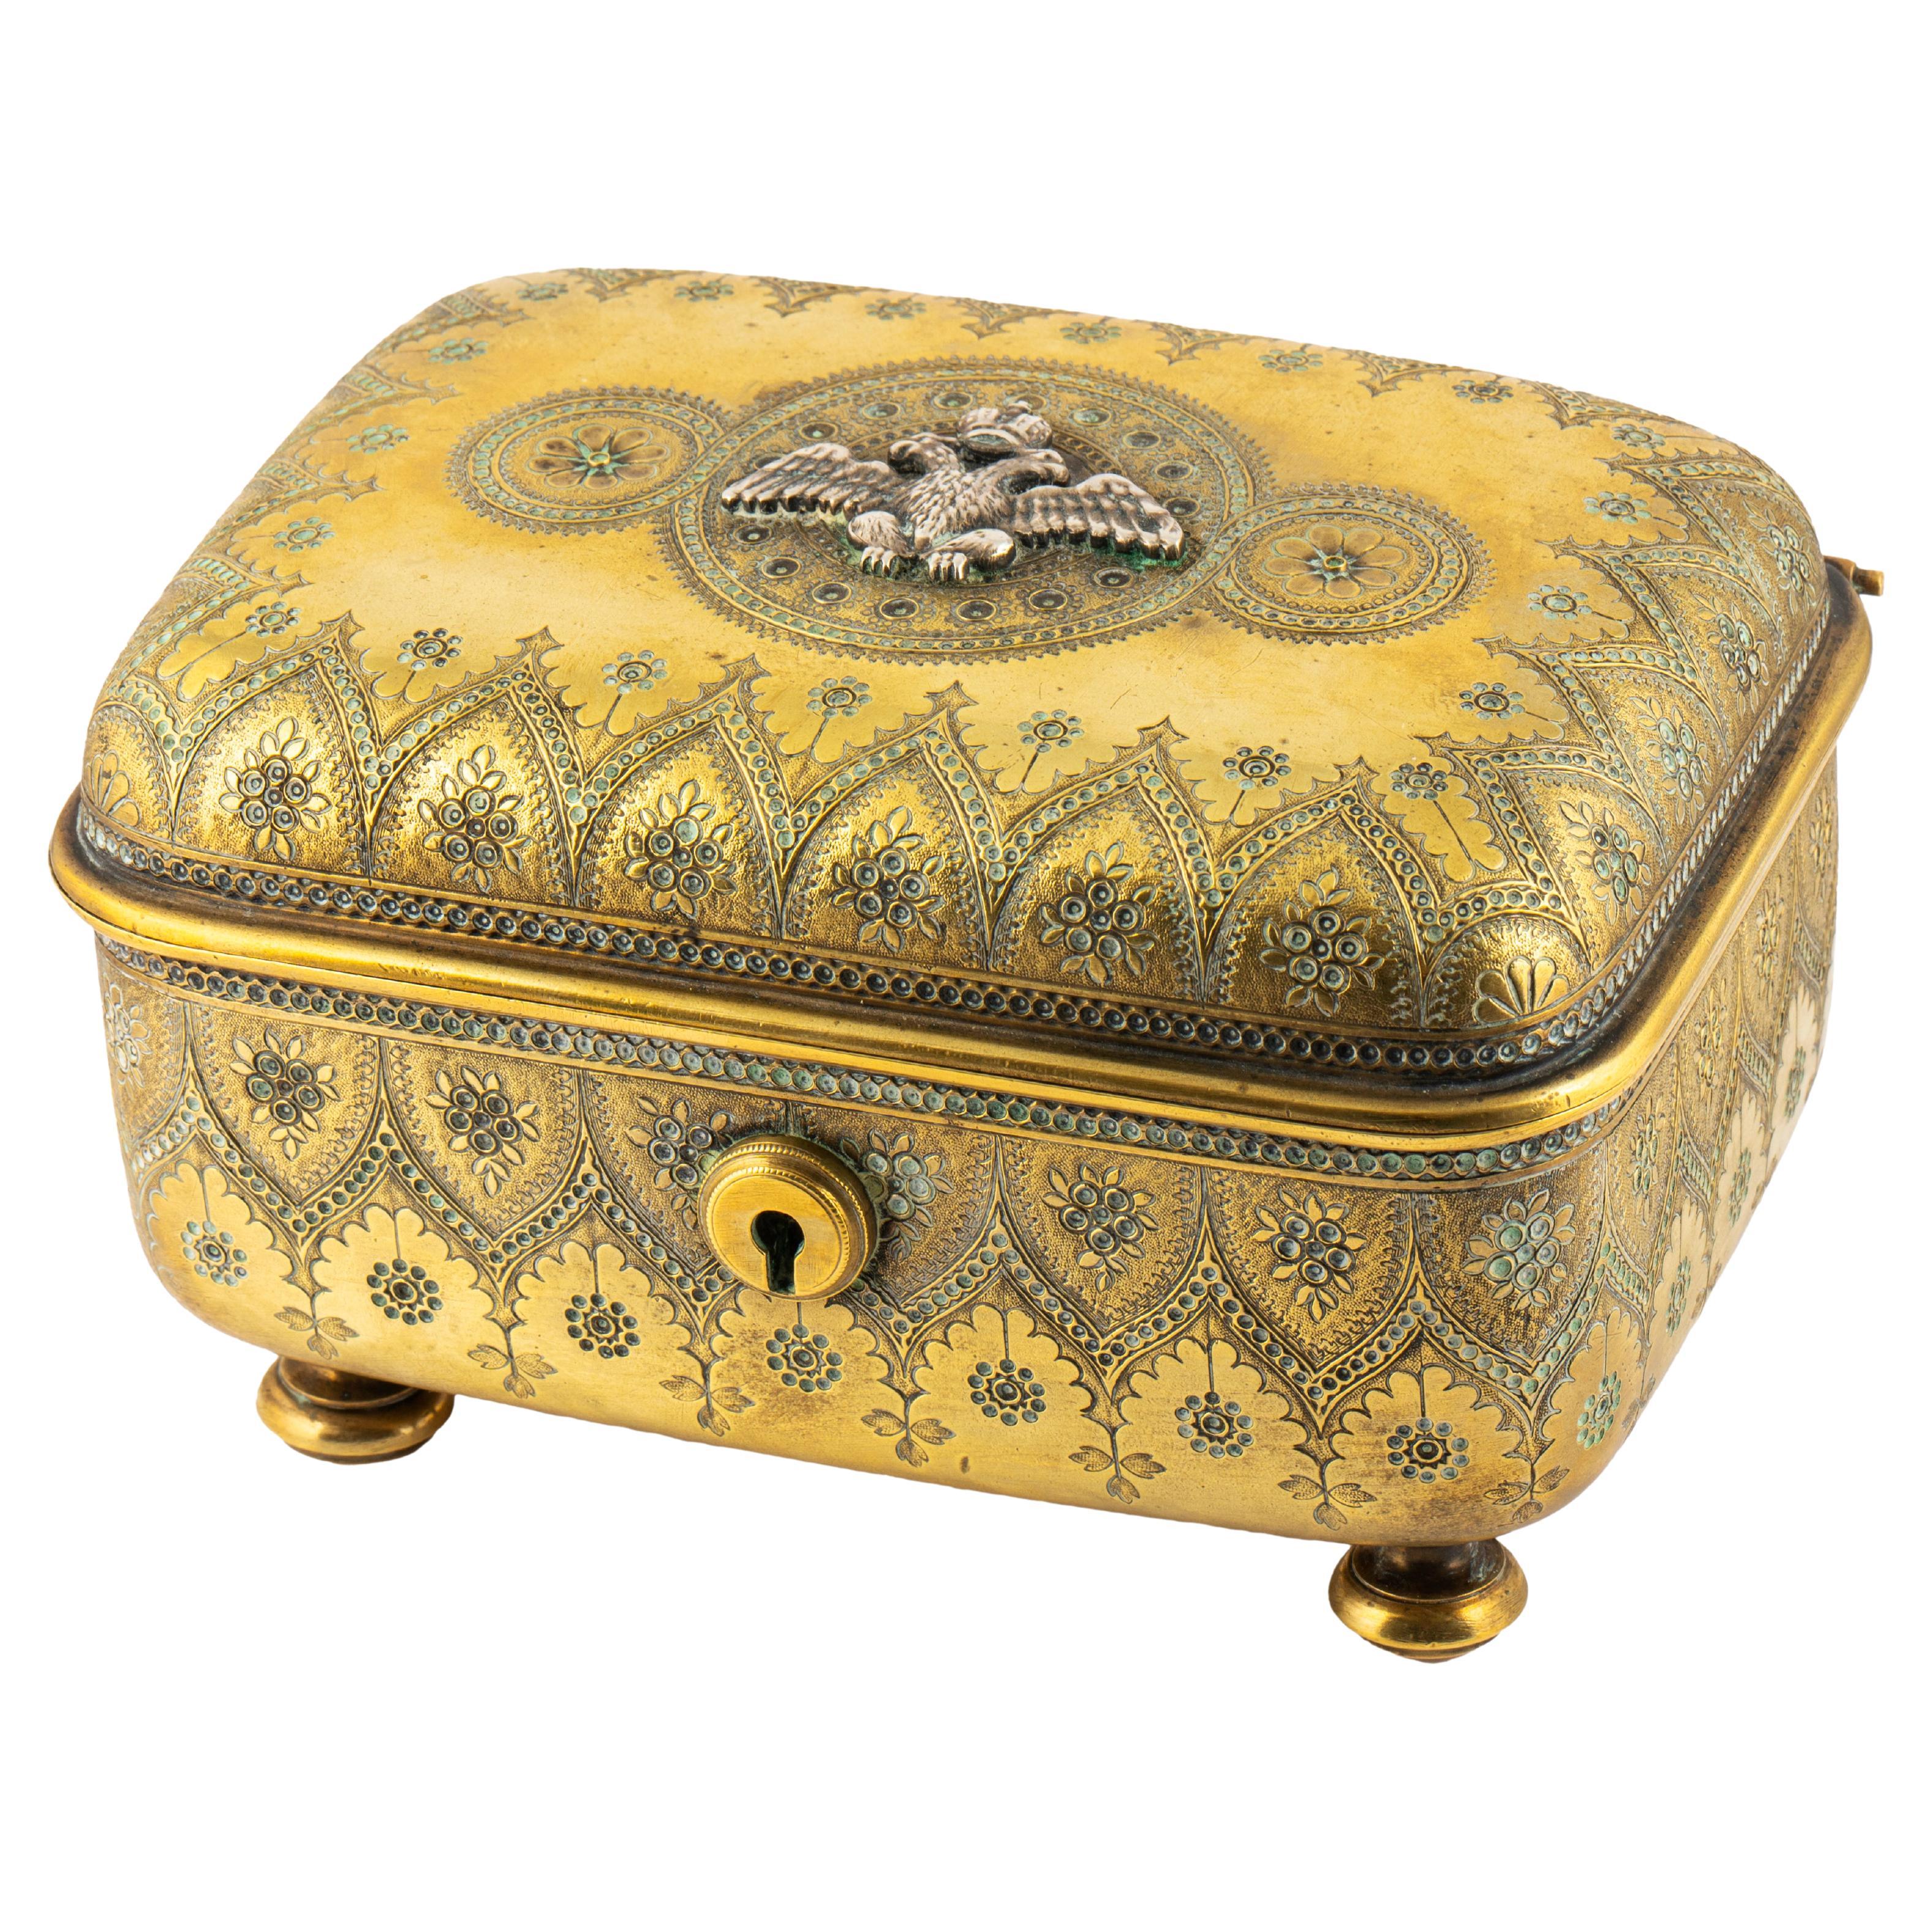 Russian Imperial-era Brass Neoclassical Eagle Box, 19th century